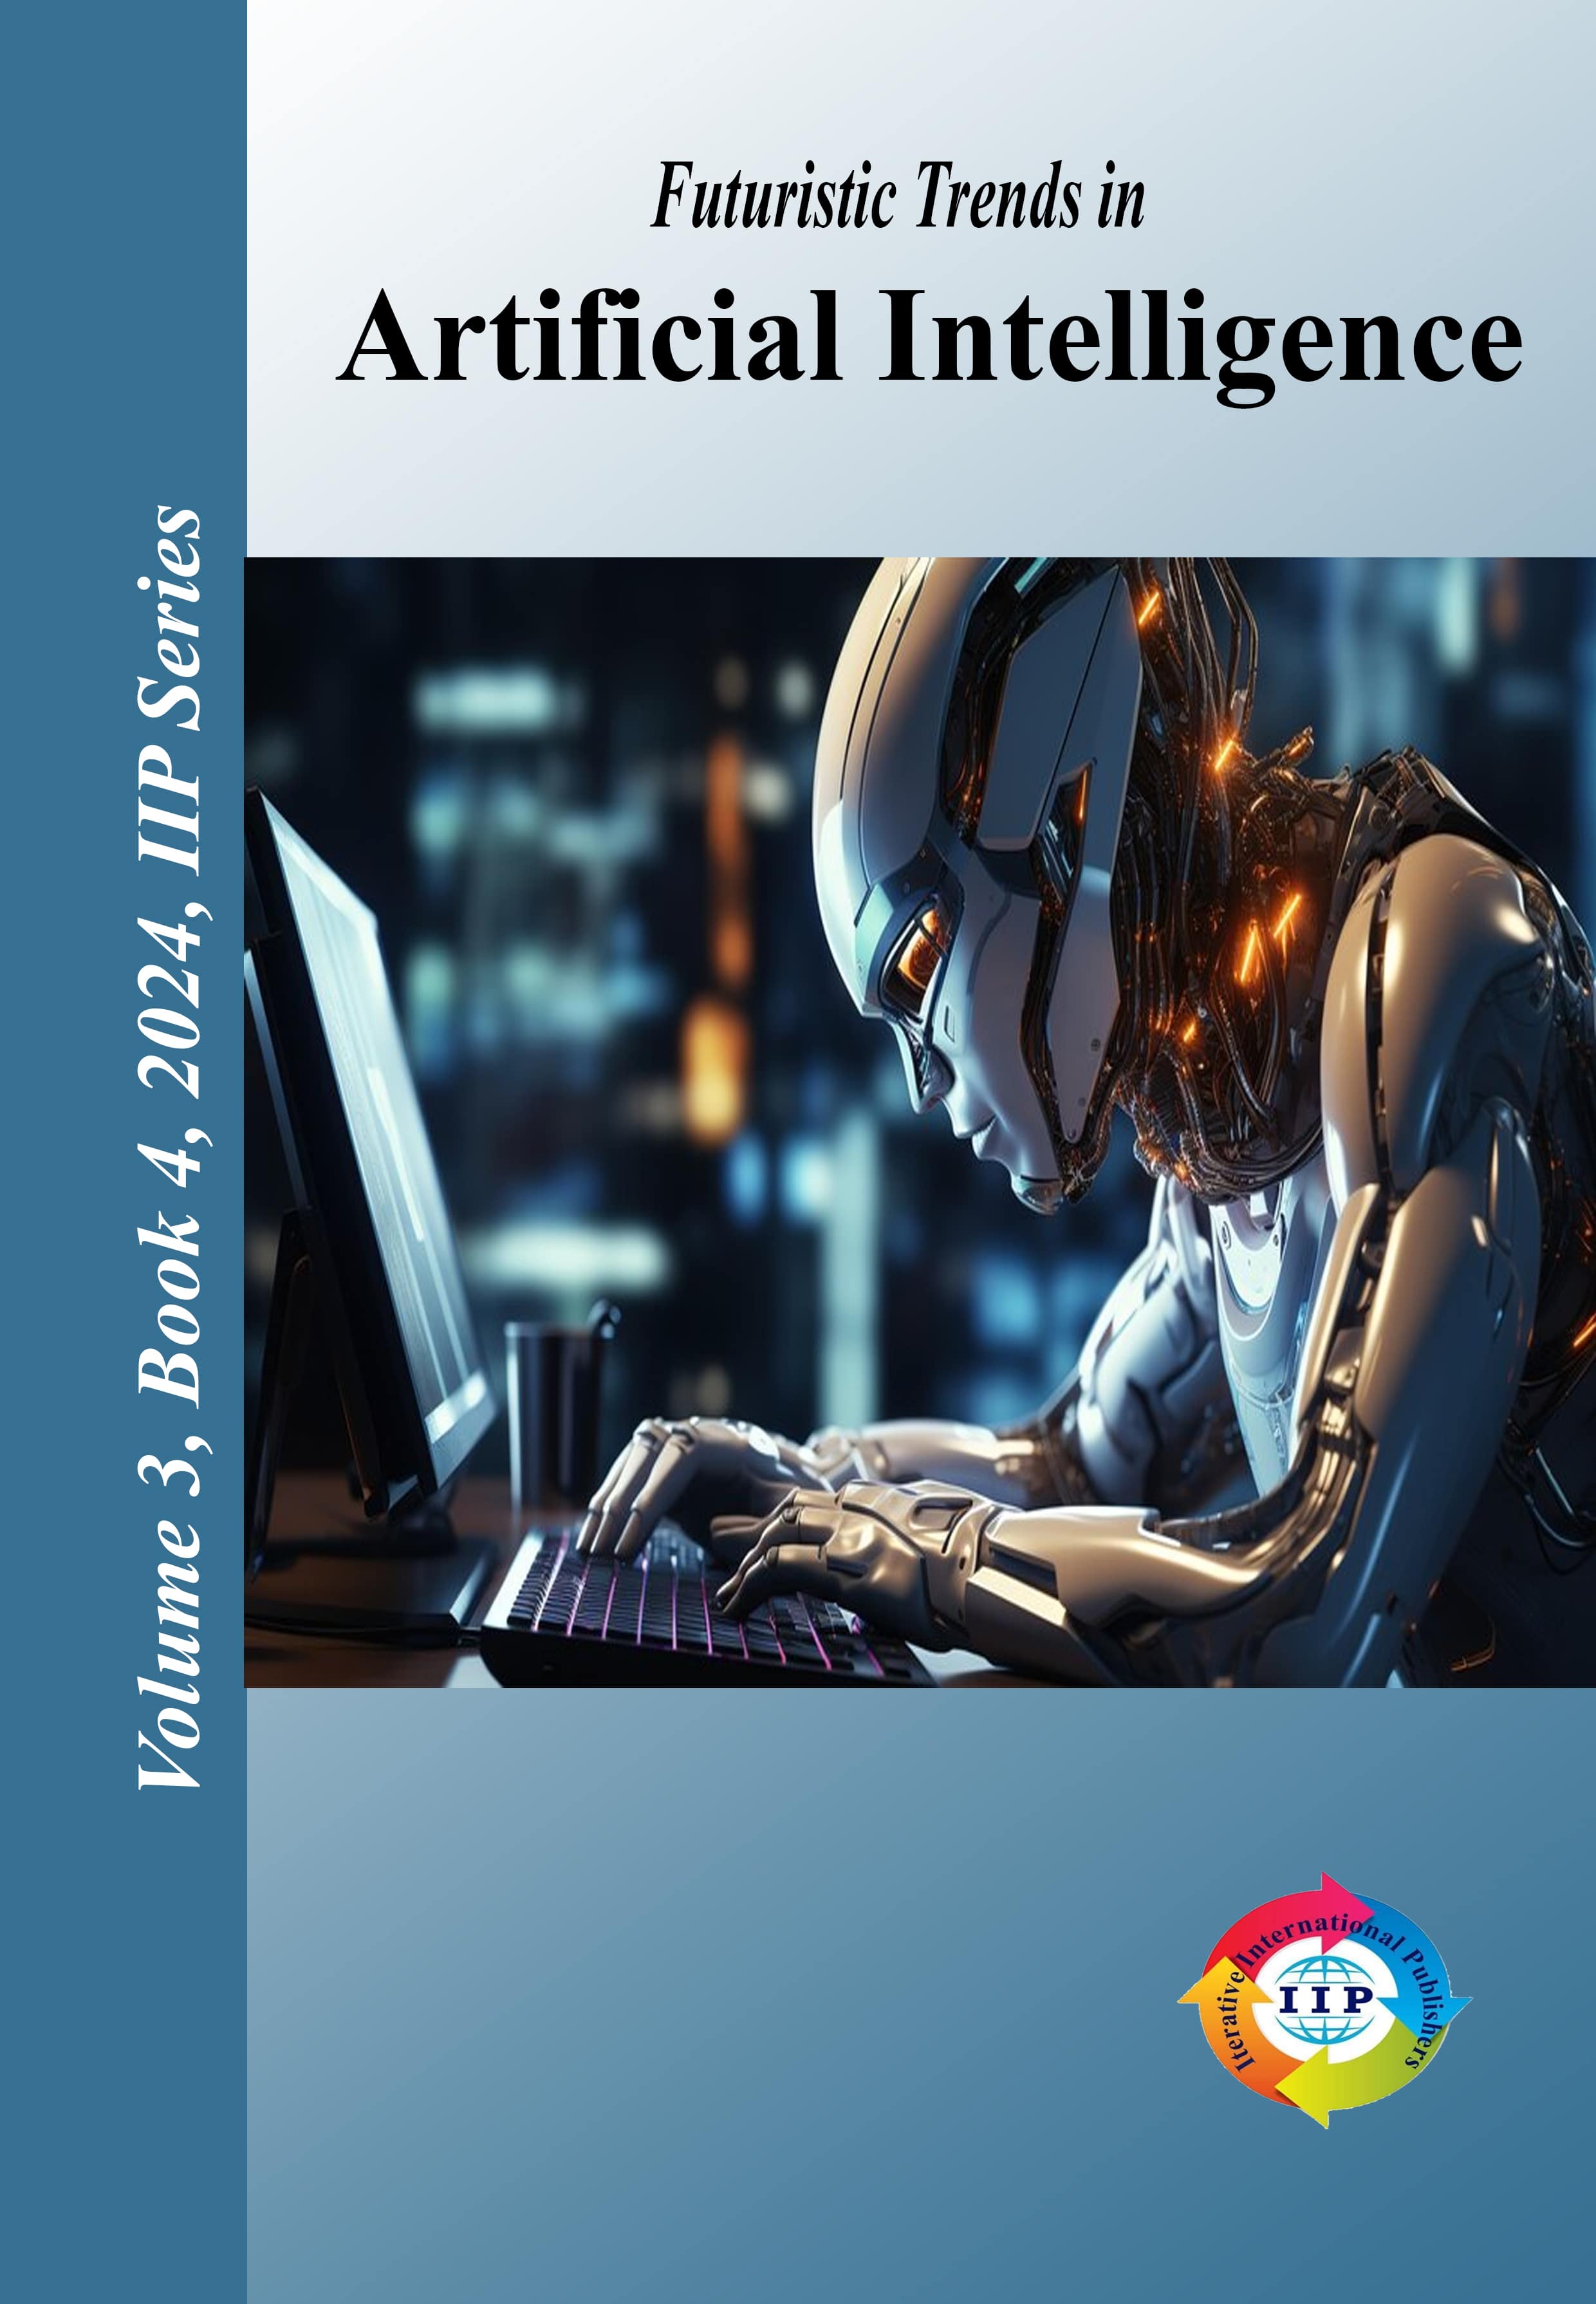 Futuristic Trends in Artificial Intelligence Volume 3 Book 4